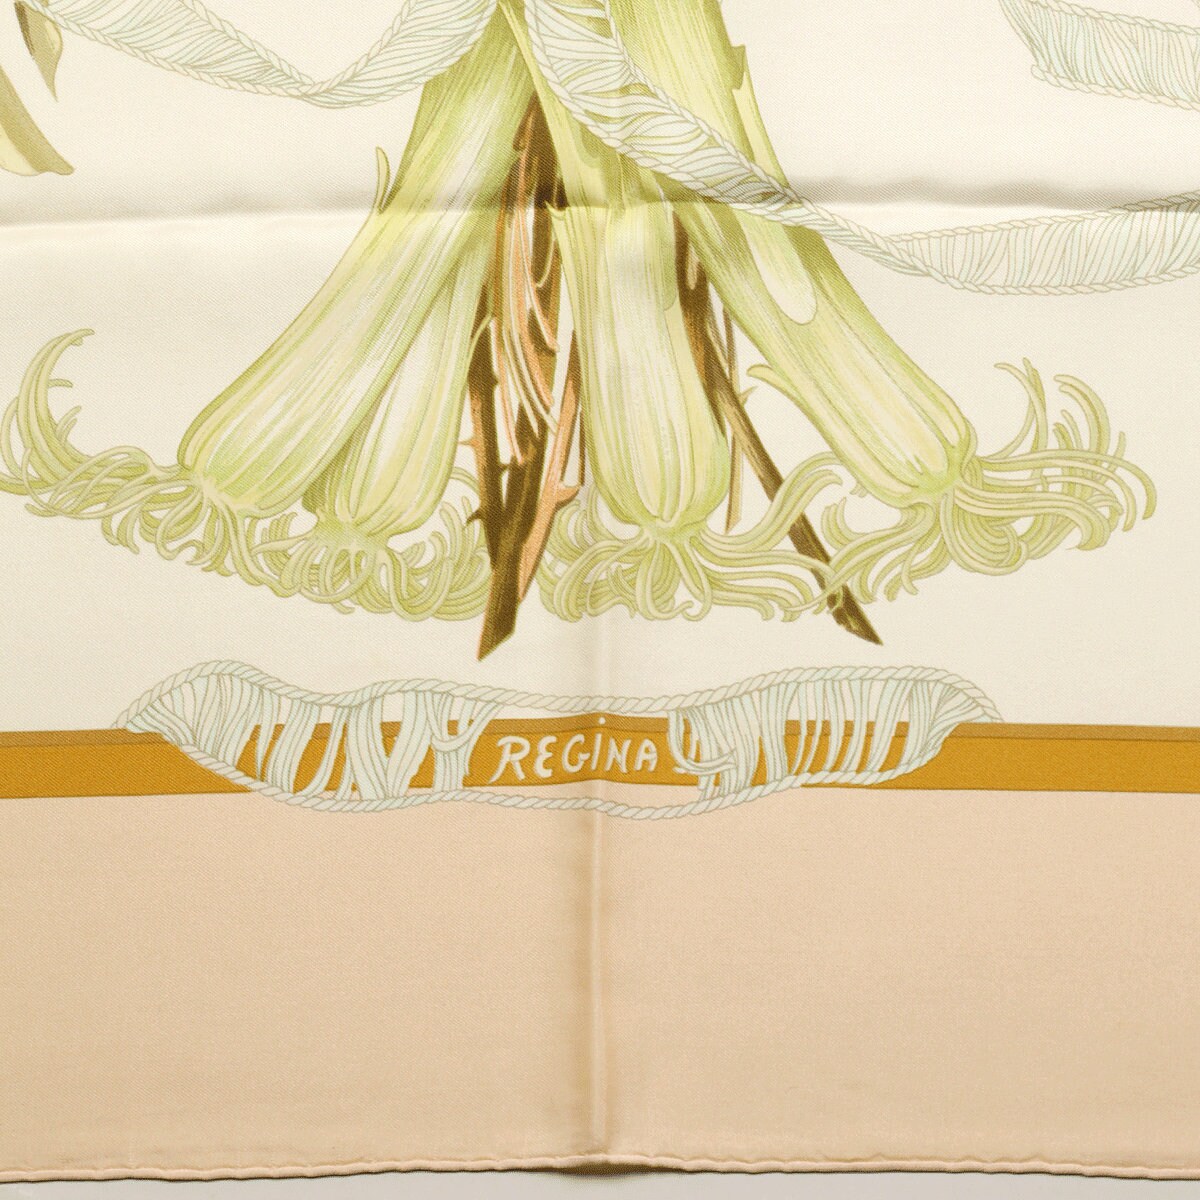 Hermes Scarf "Regina" by Leila Menchari 90cm Silk | Carre Foulard